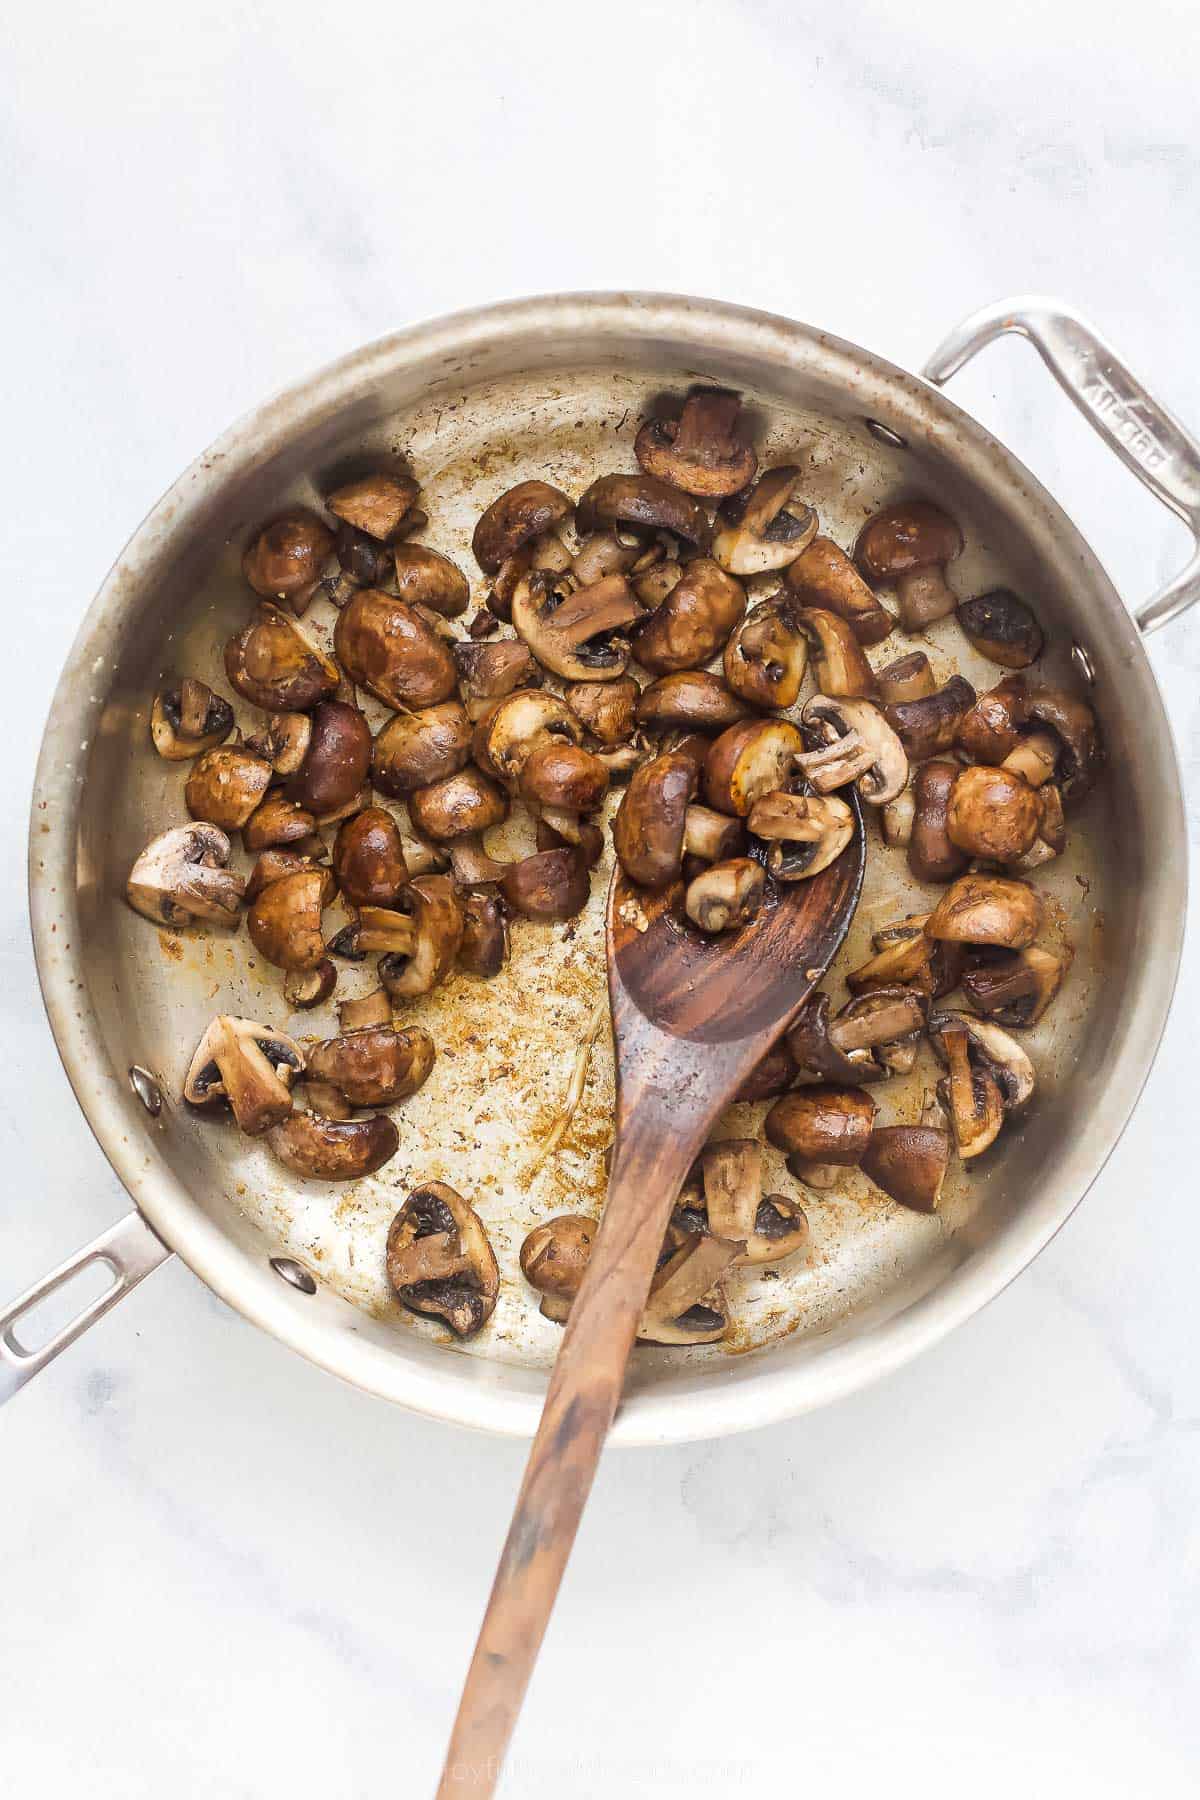 cooking mushrooms in a stainless steel pan